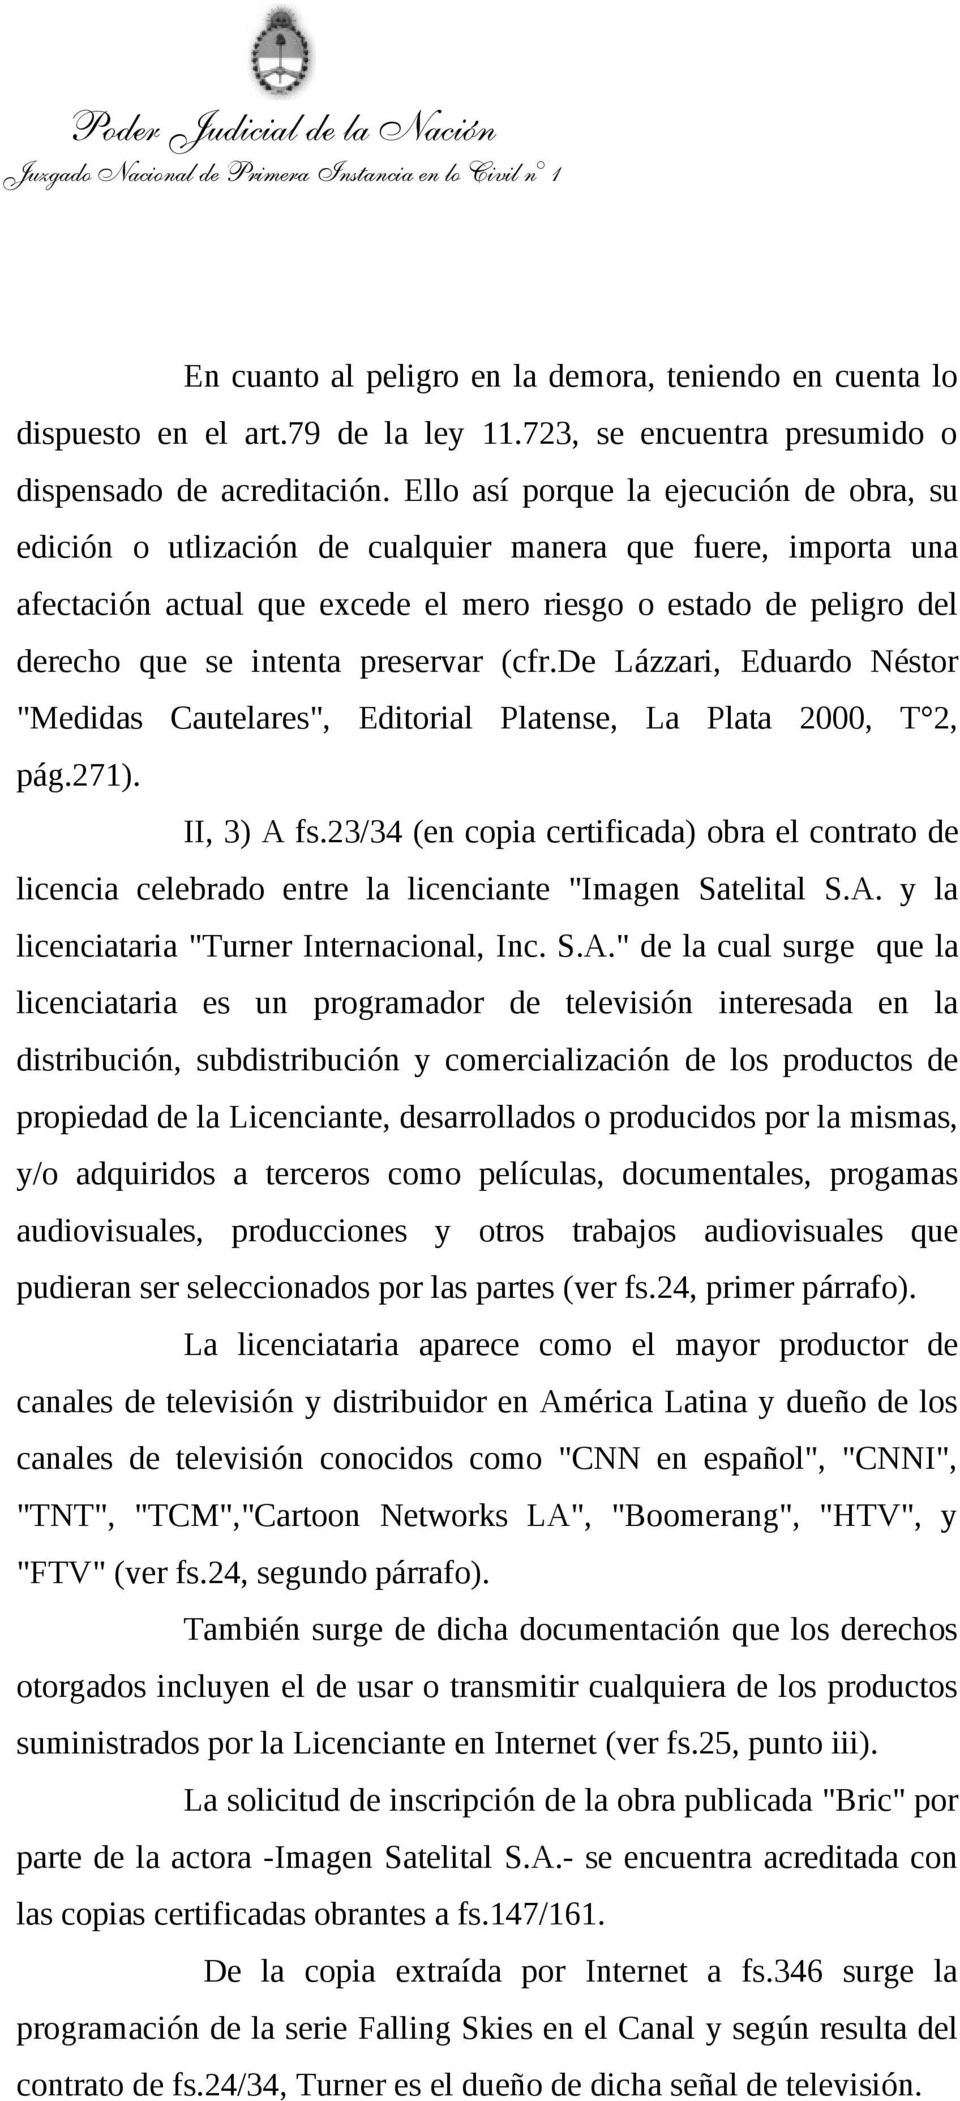 preservar (cfr.de Lázzari, Eduardo Néstor "Medidas Cautelares", Editorial Platense, La Plata 2000, T 2, pág.271). II, 3) A fs.